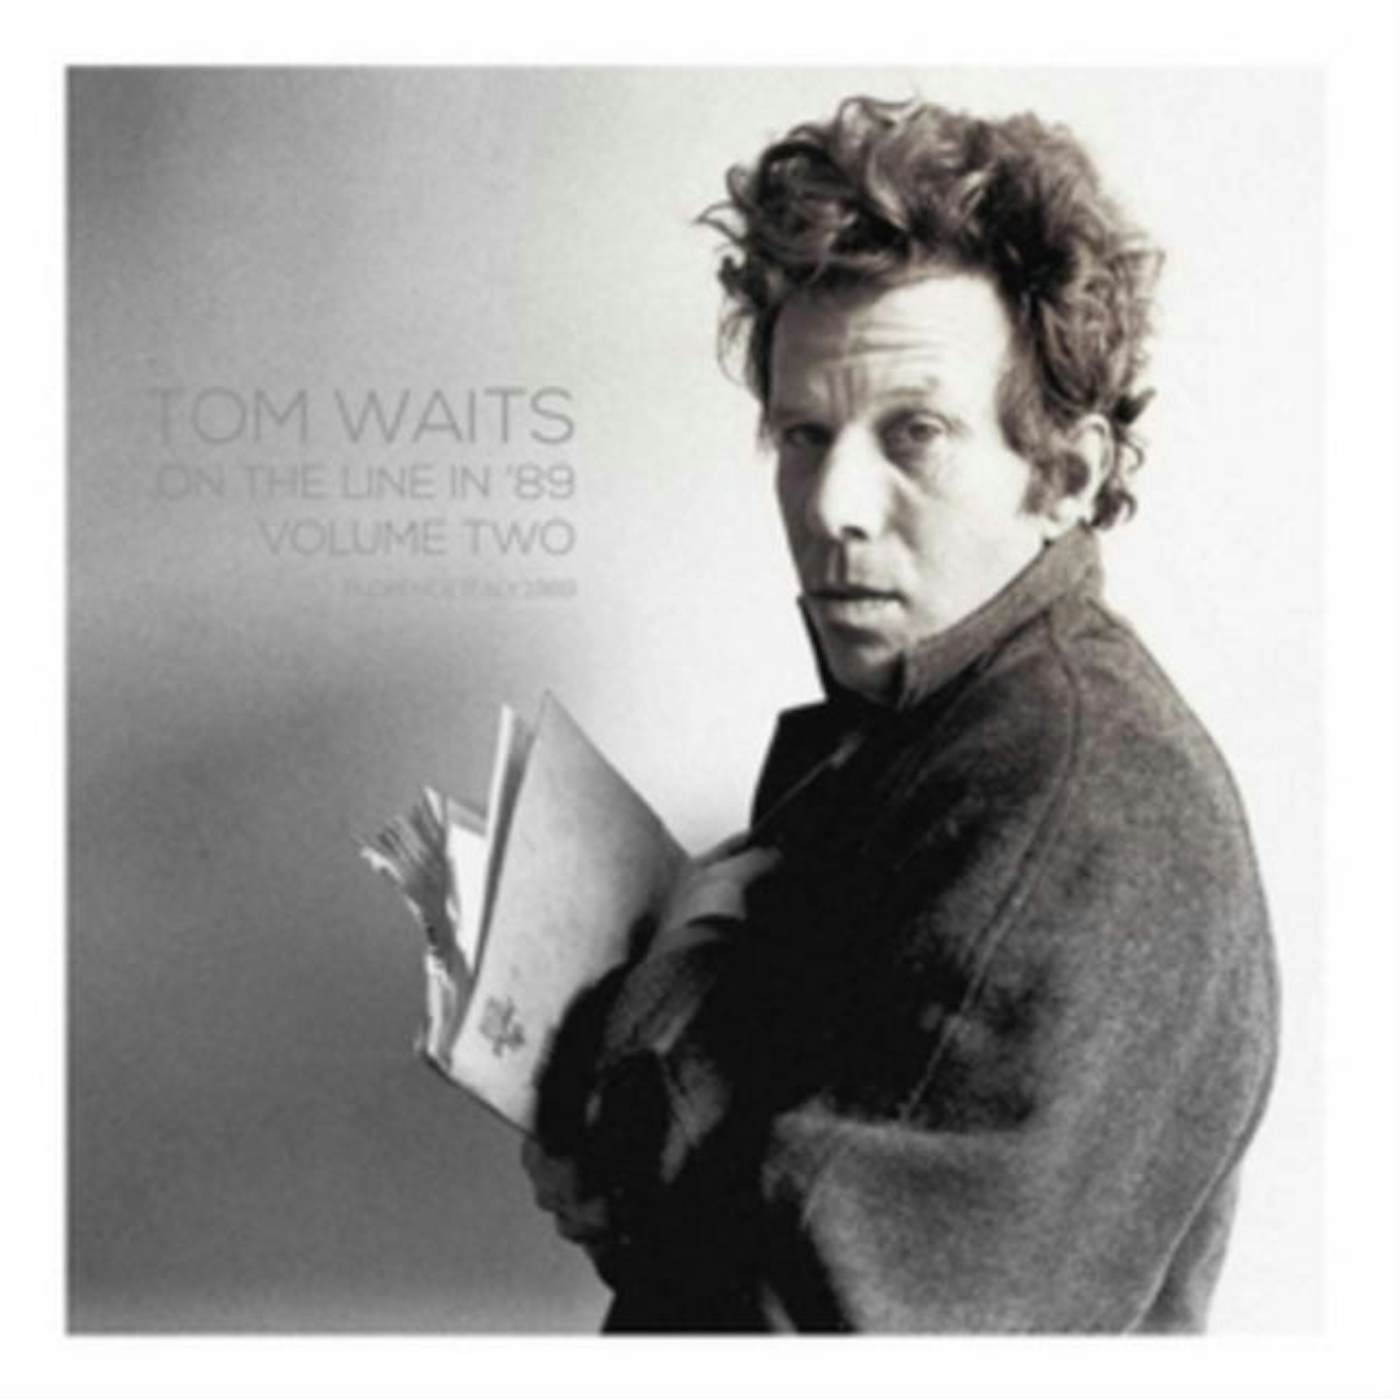 Tom Waits LP - On The Line In '89 Vol.2 (Vinyl)